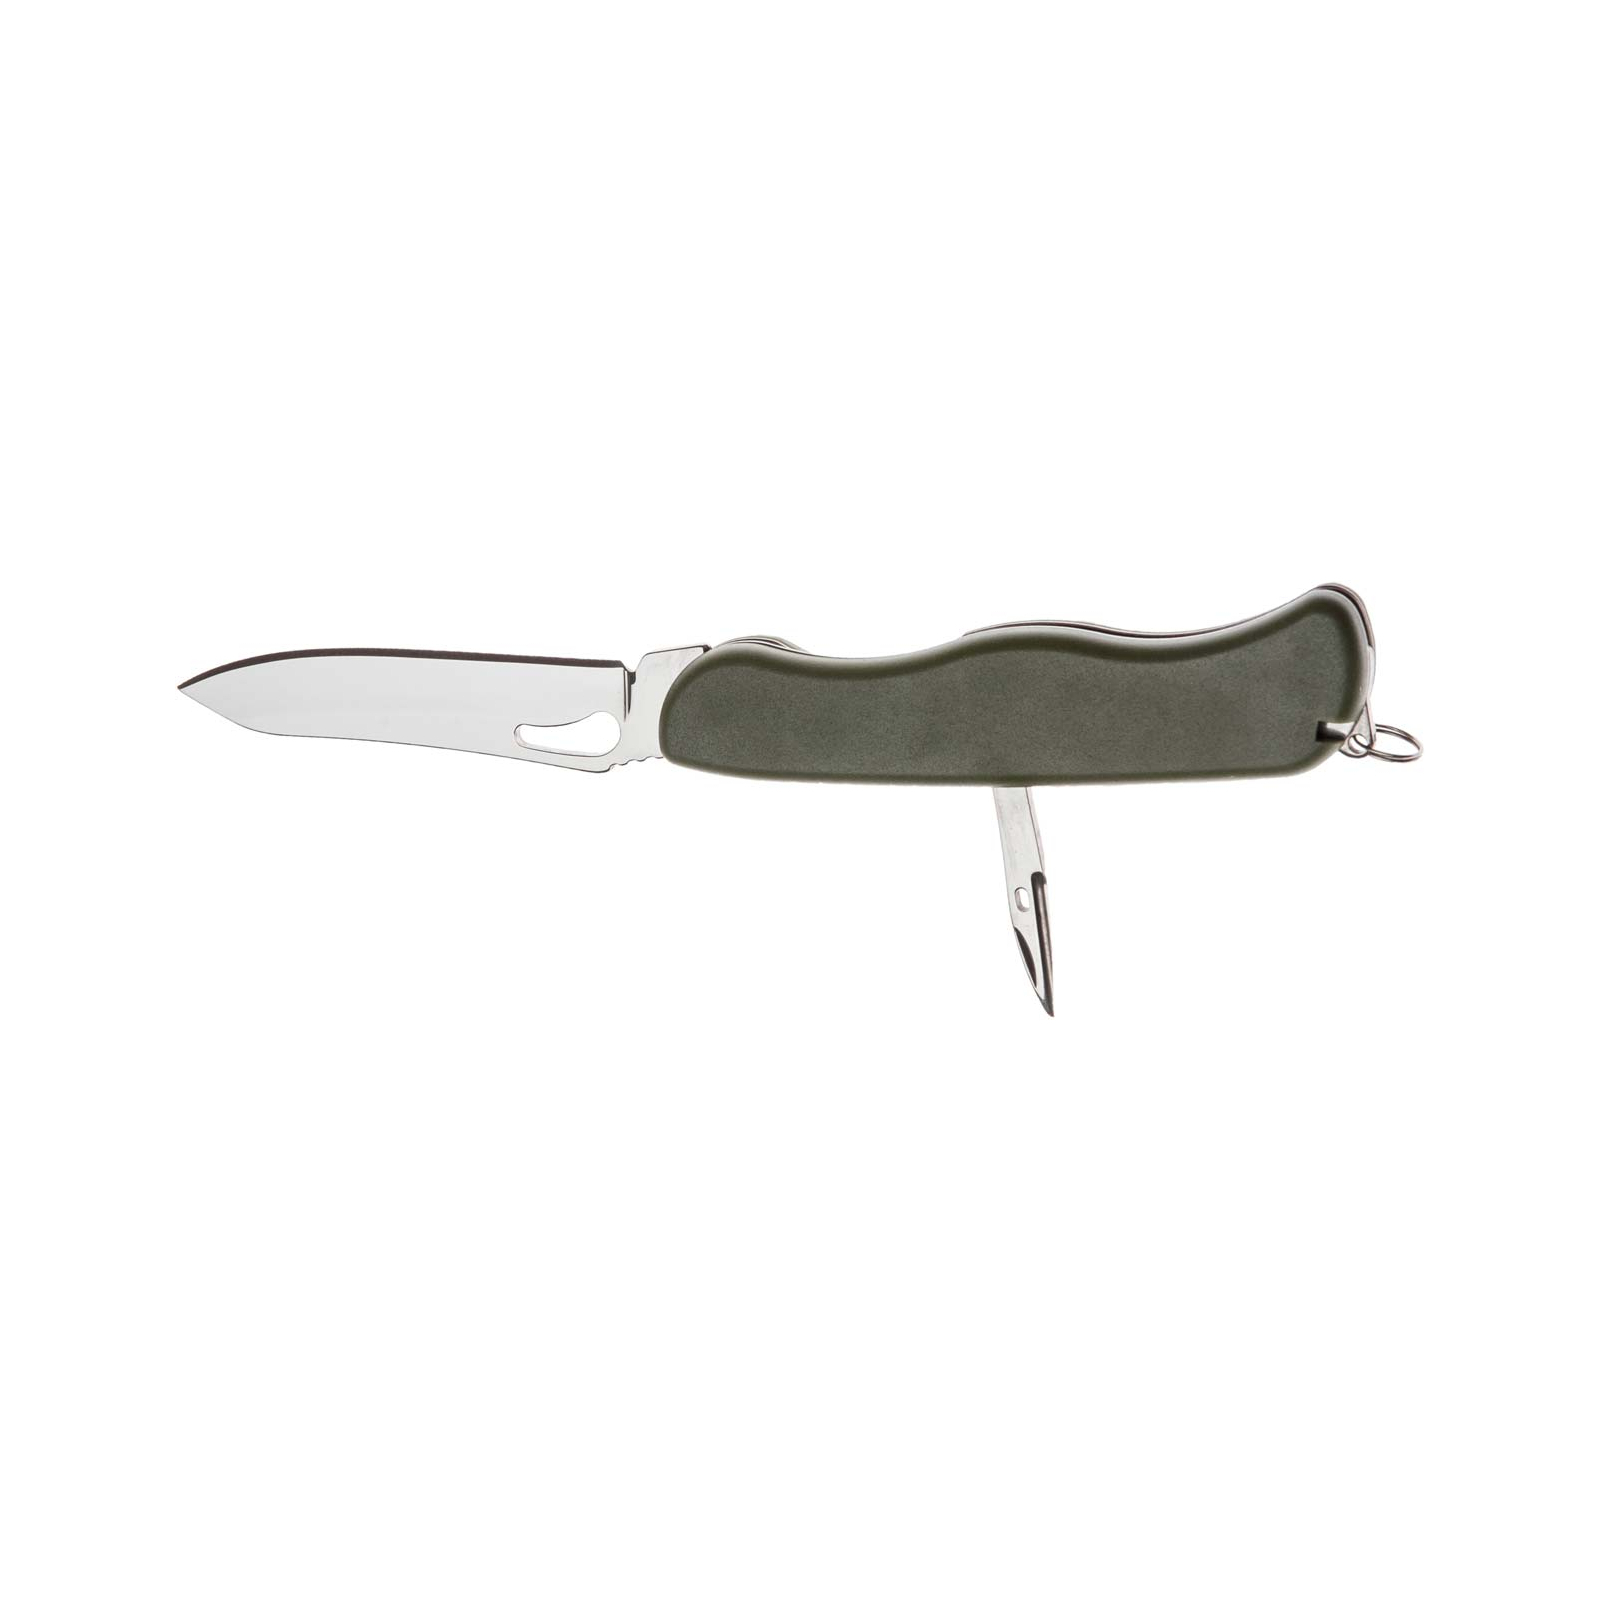 Нож Partner HH012014110 Ol olive (HH012014110 Ol)